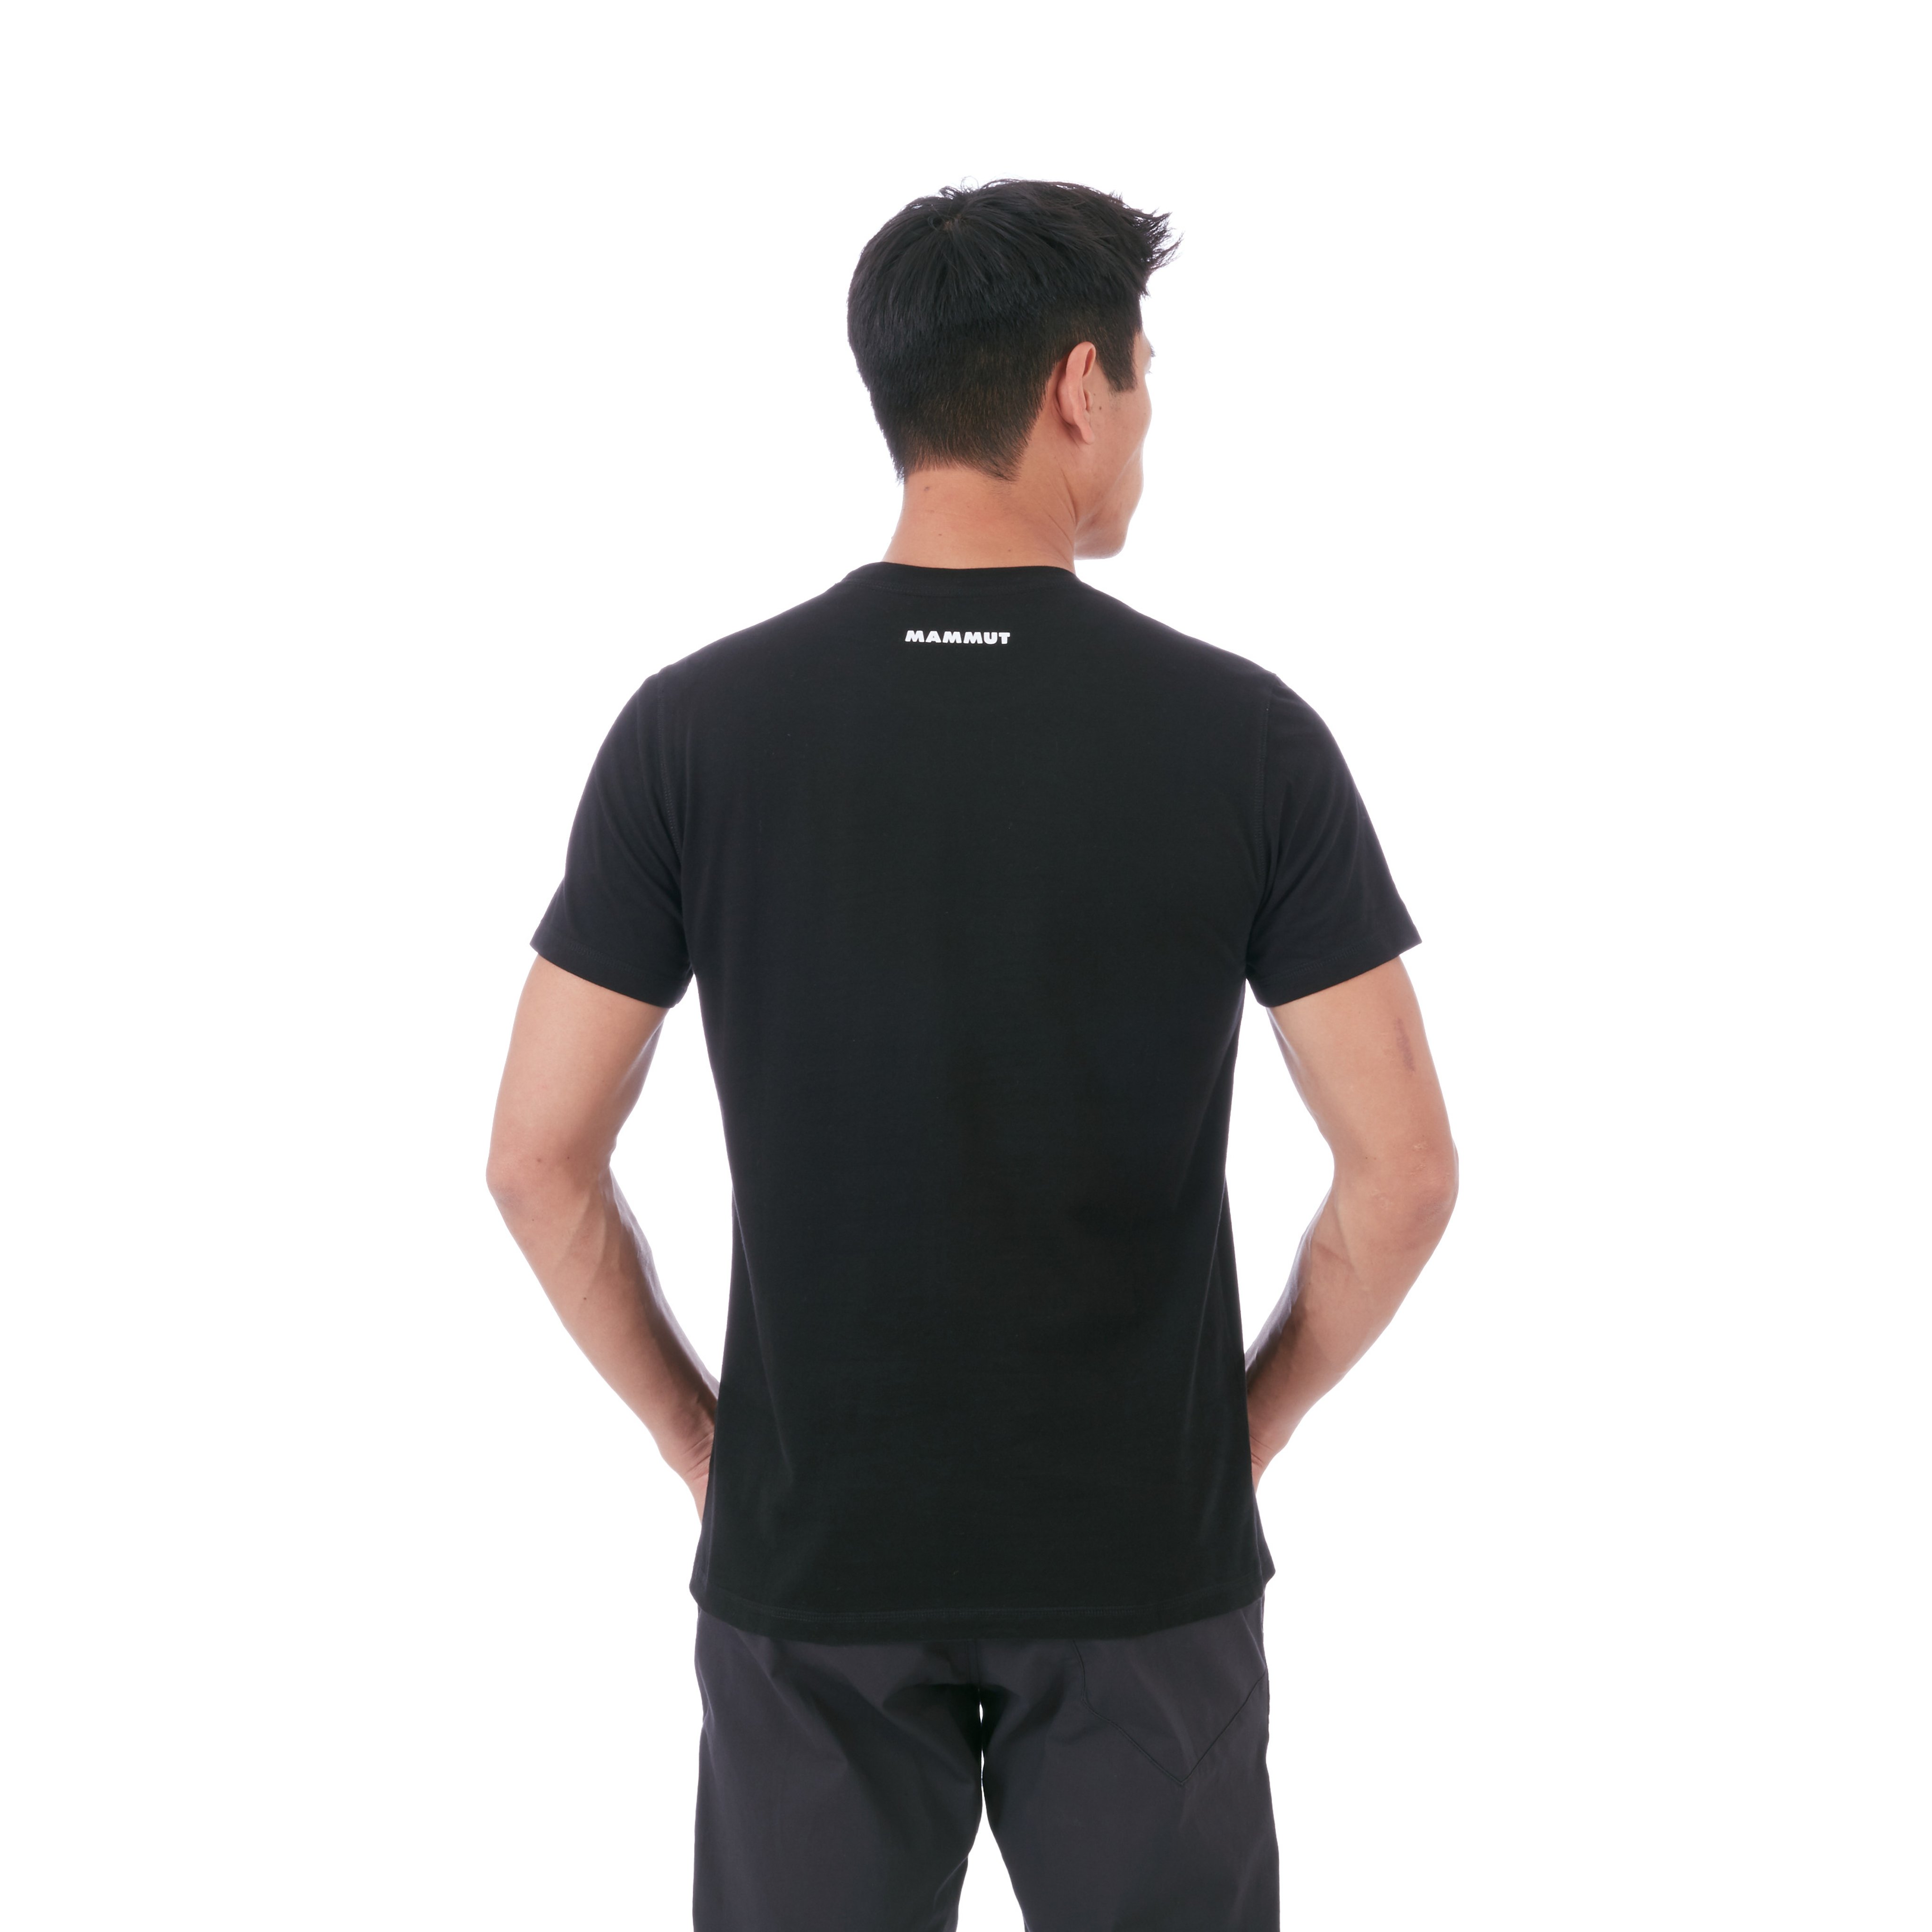 Mammut T-Shirt Men product image